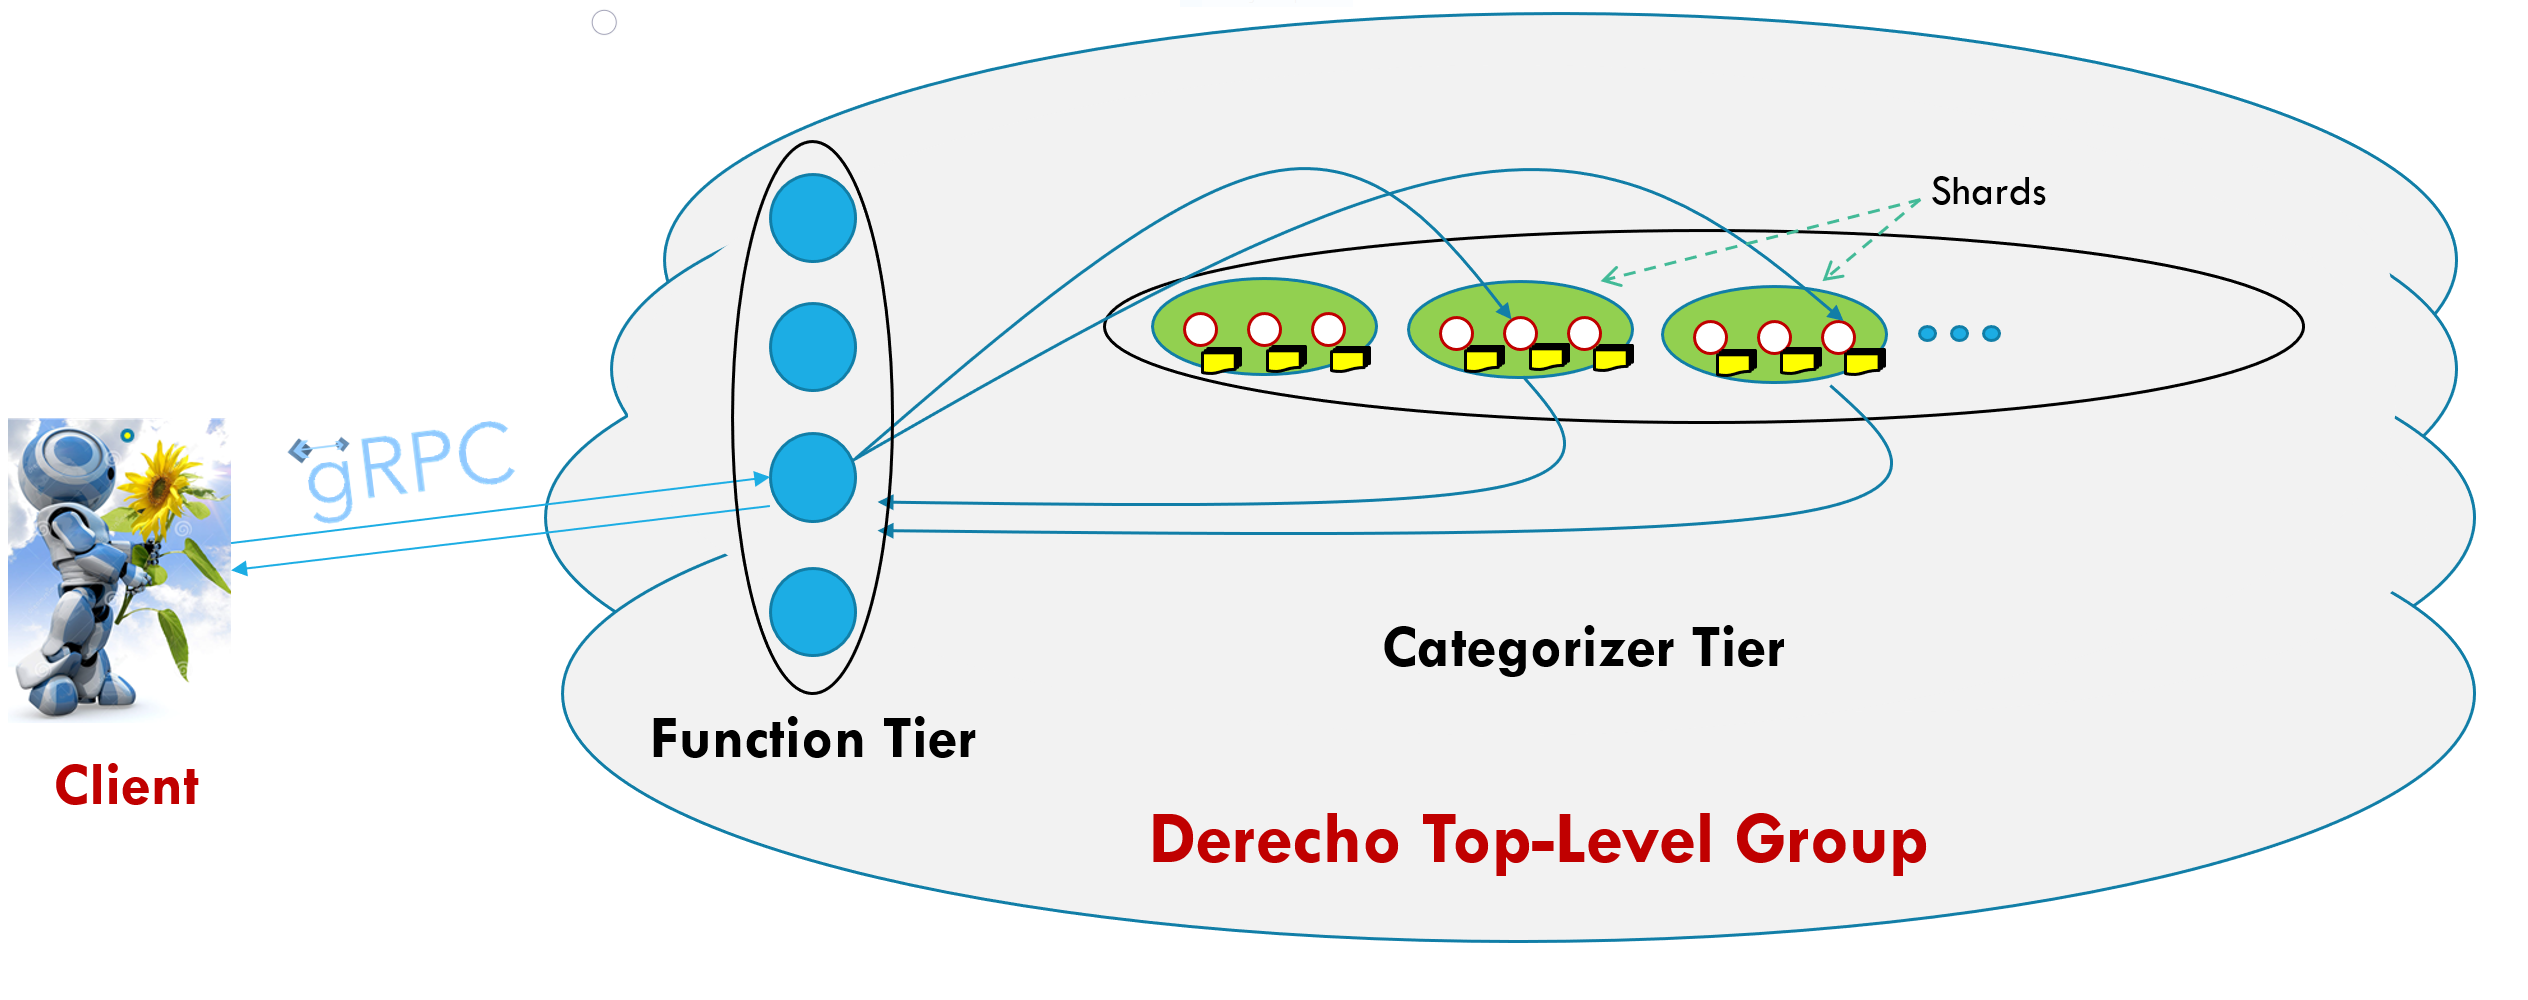 A diagram explaining the Demo's architecture